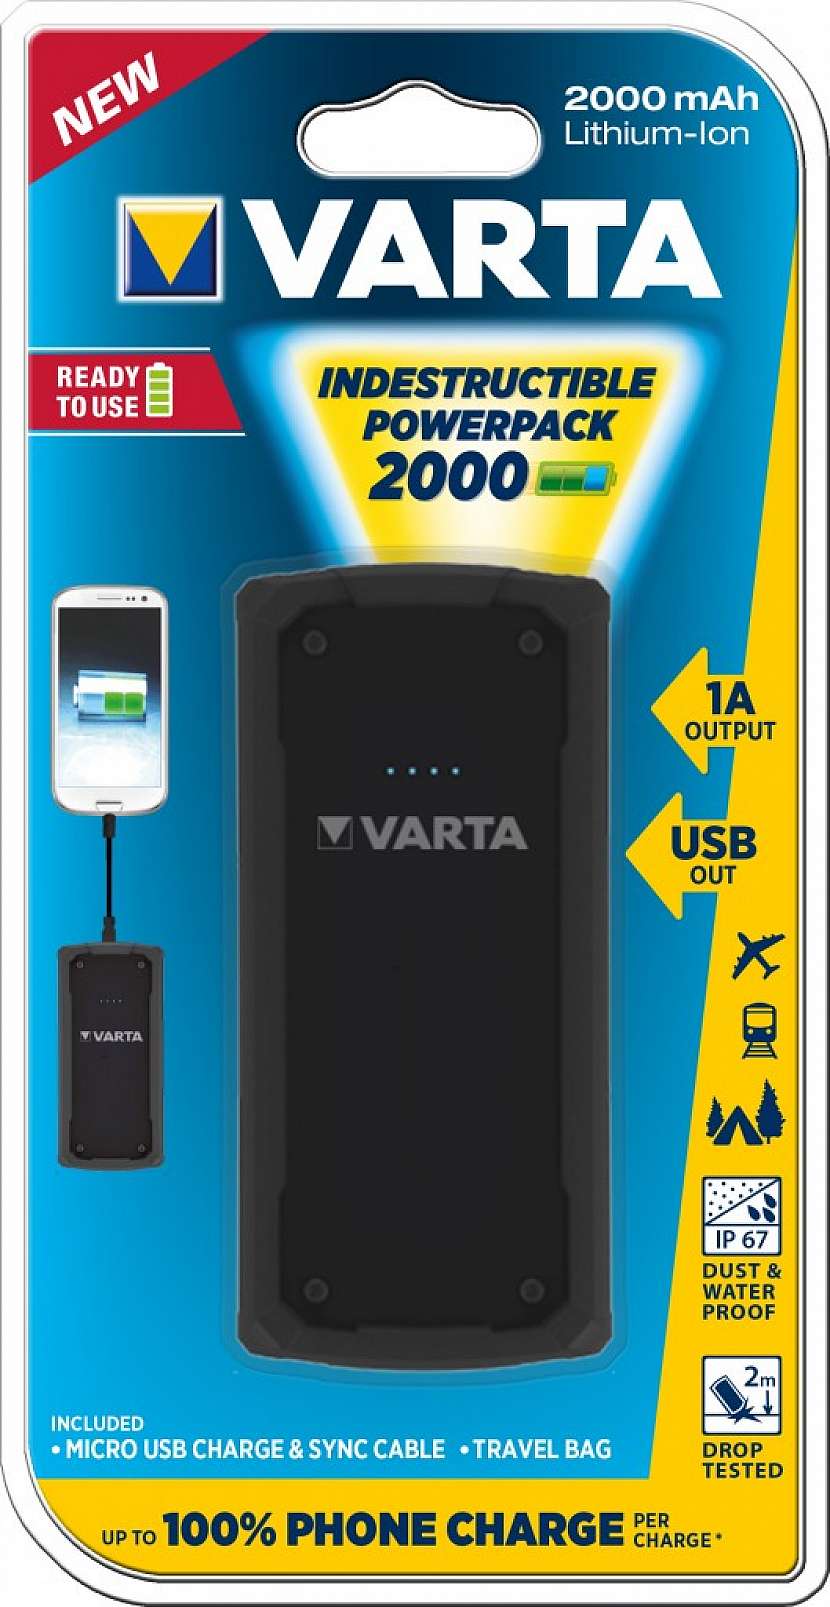 Varta Indestructible 2000 Powerpack